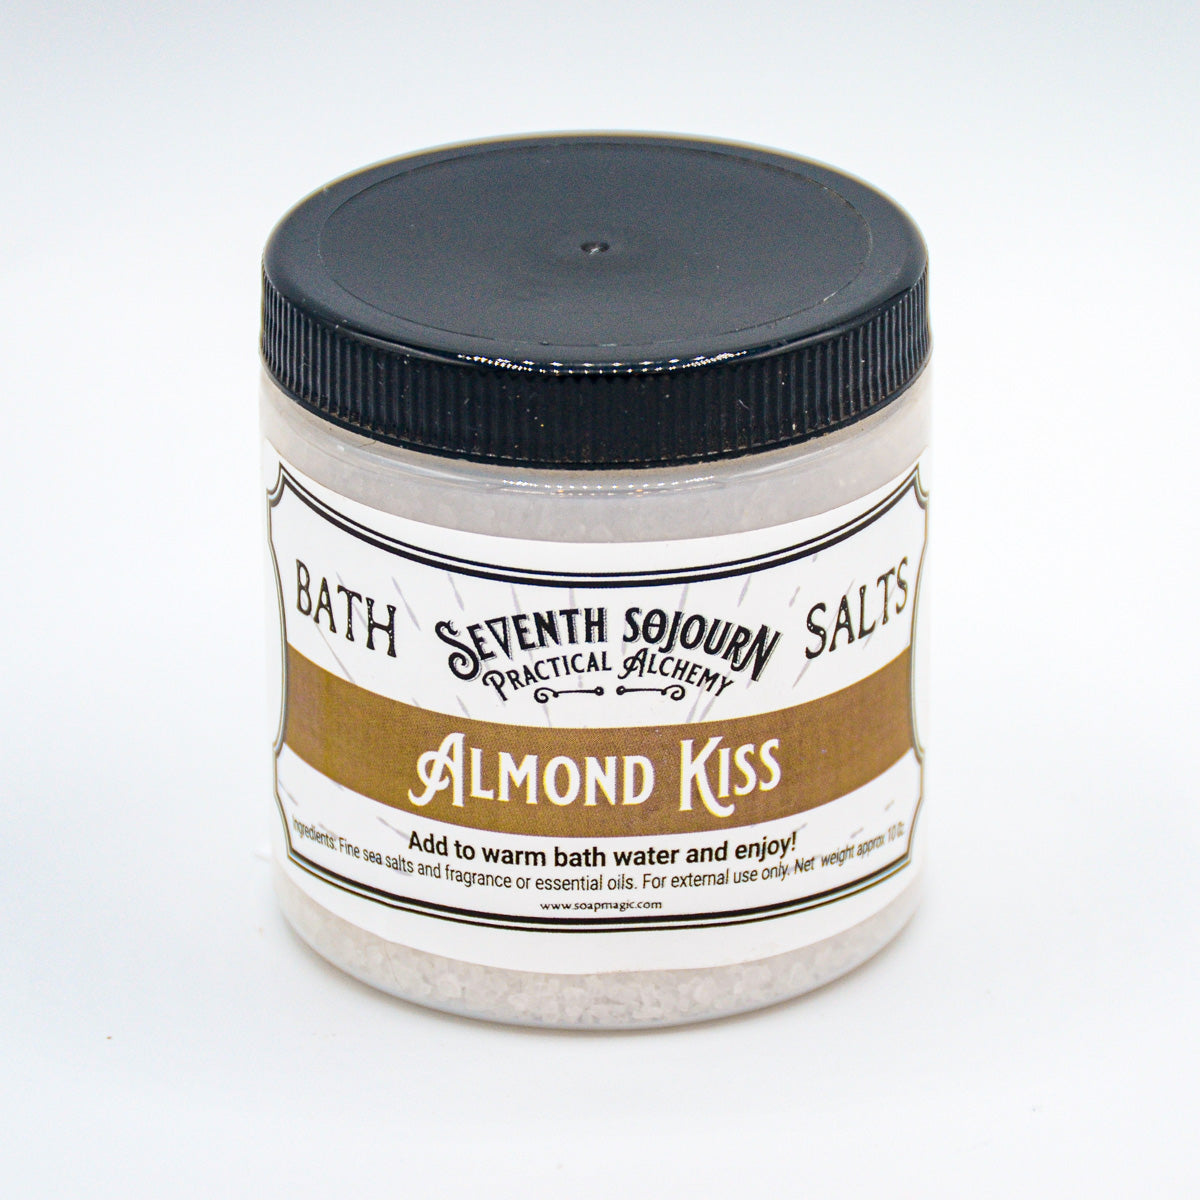 Almond Kiss Bath Salt